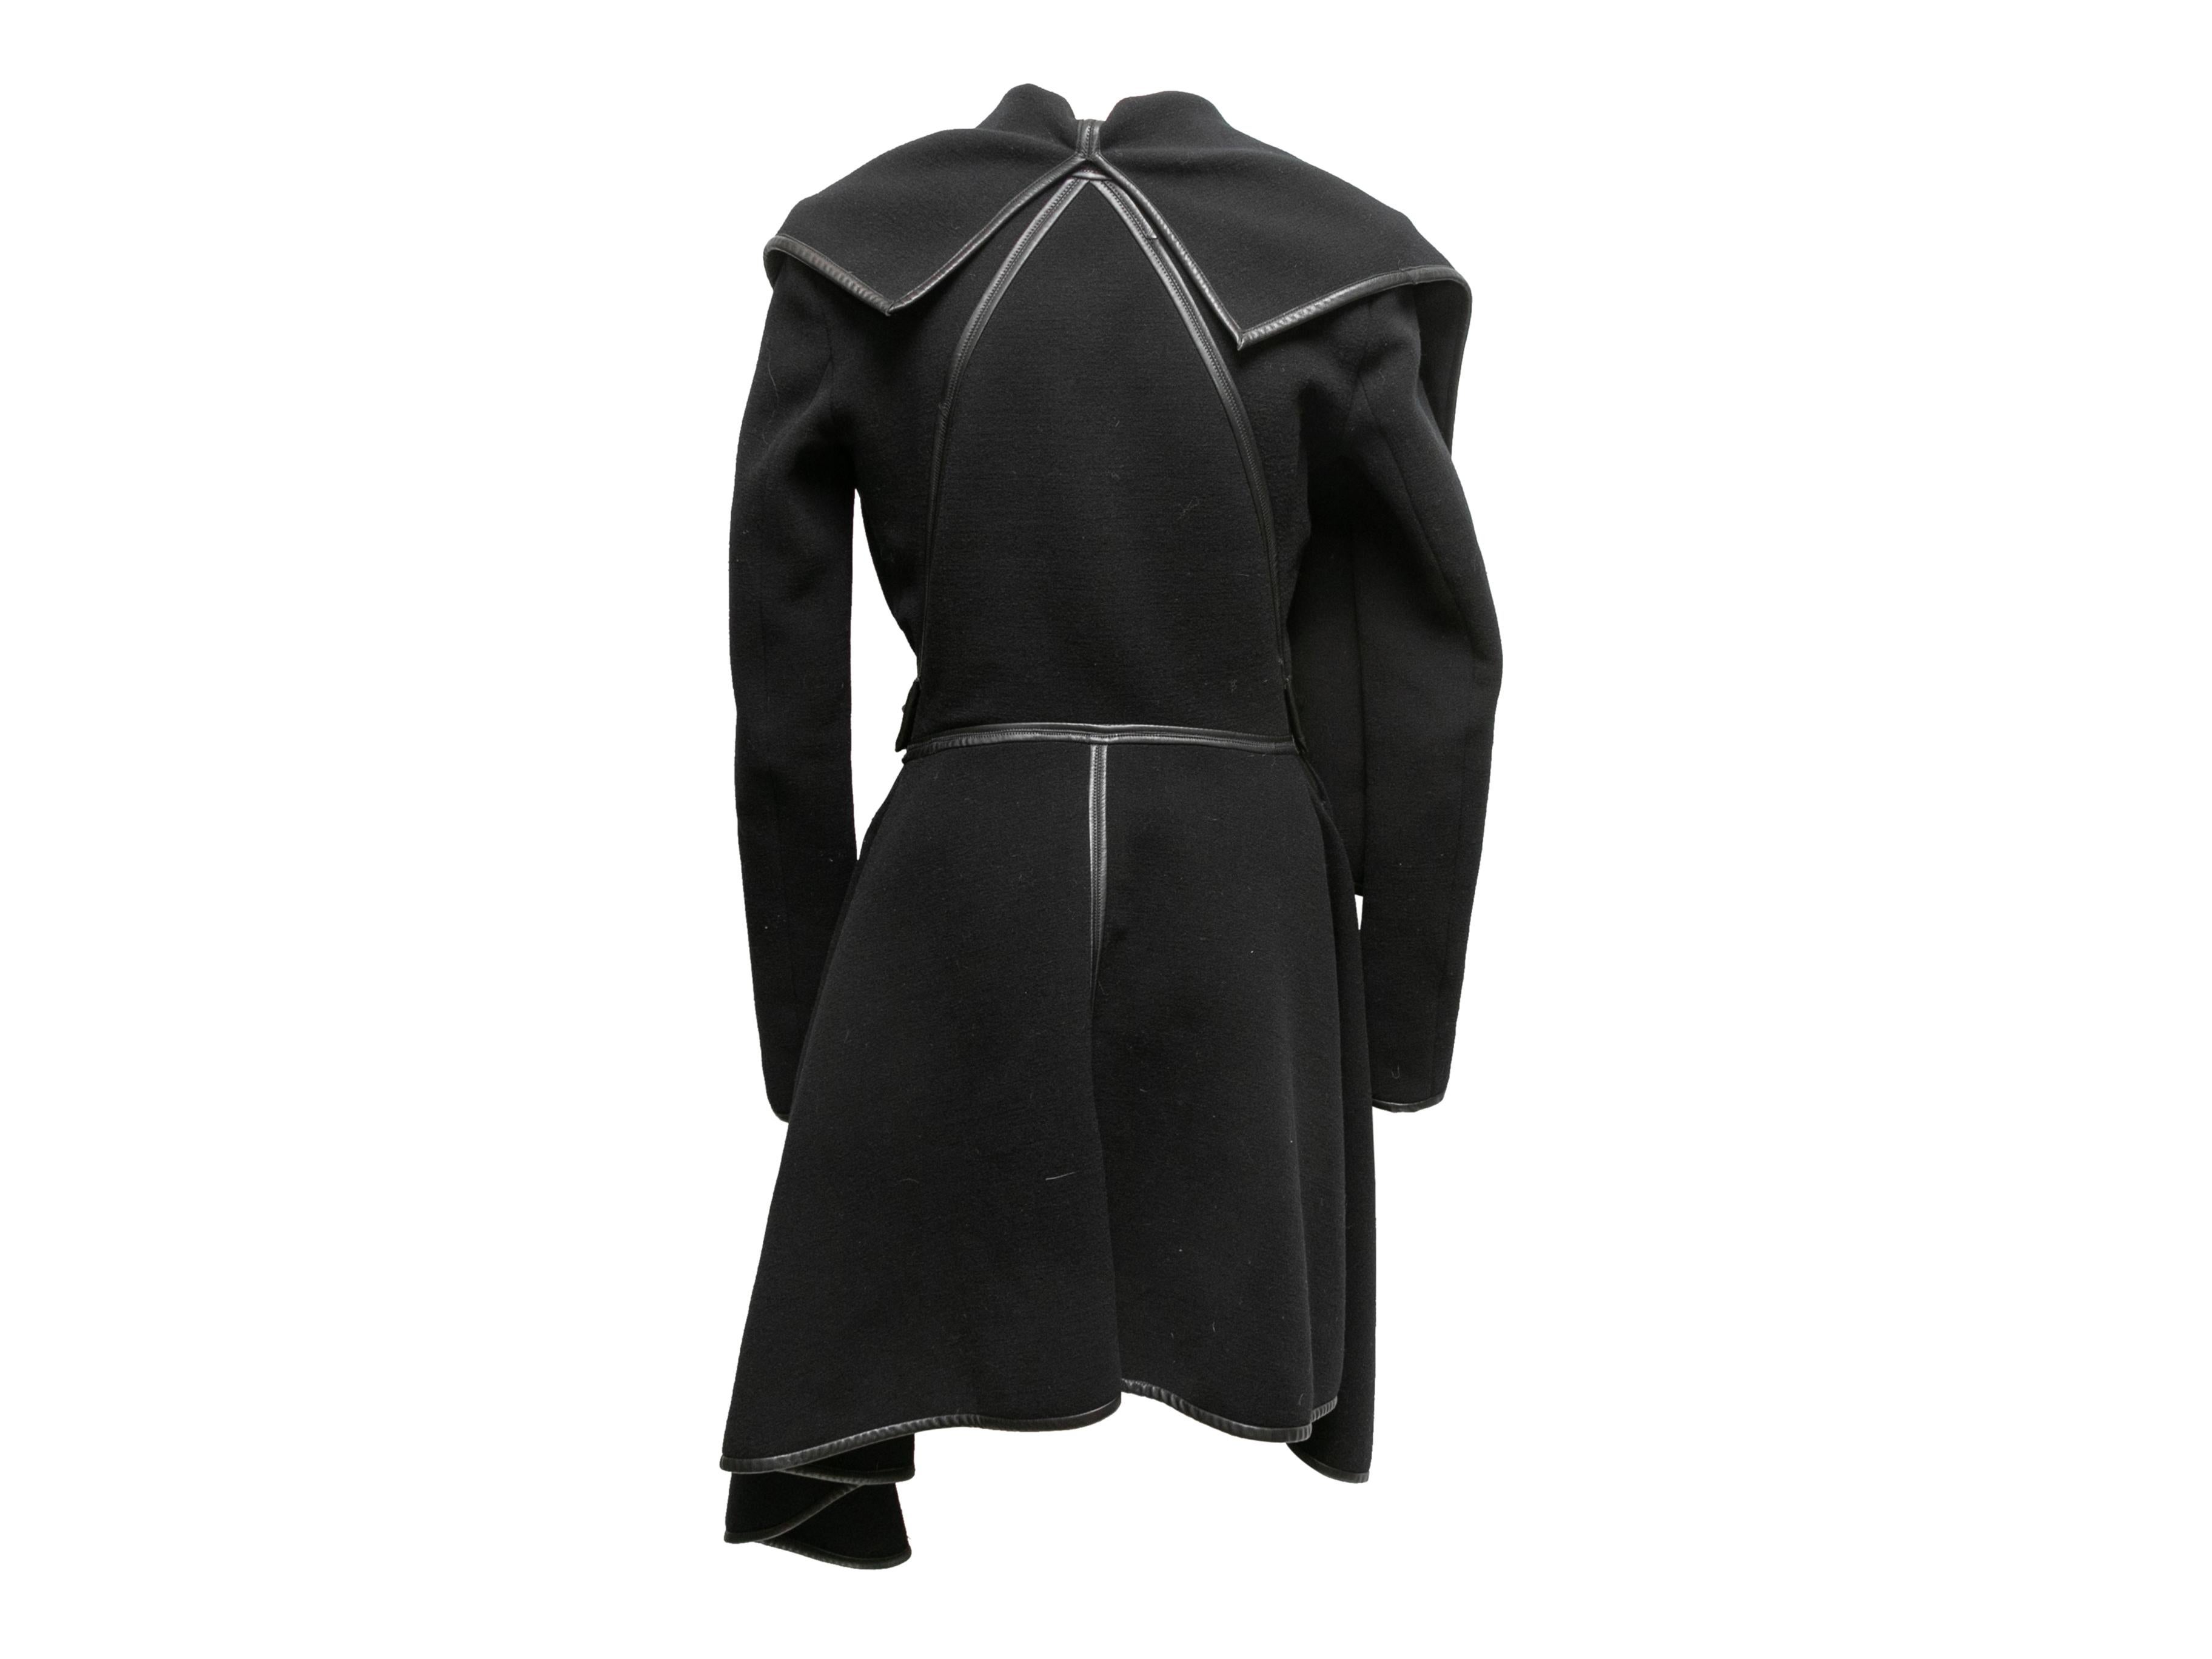 Black wrap coat by Gareth Pugh. Leather trim. Sash tie closure at waist. 34